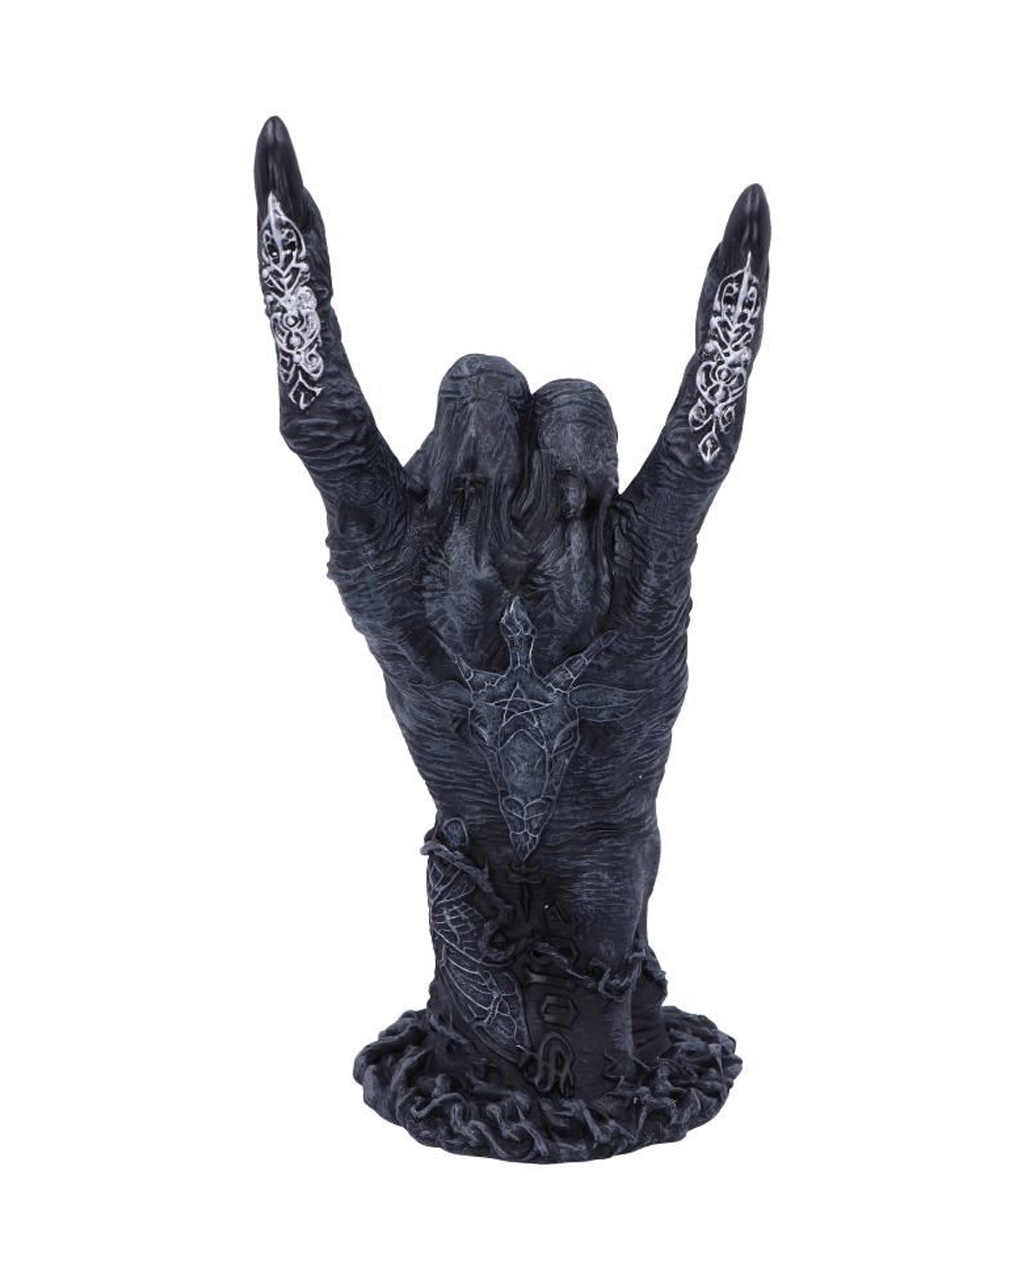 Baphomet's Hand als Gothic & Occult Deko